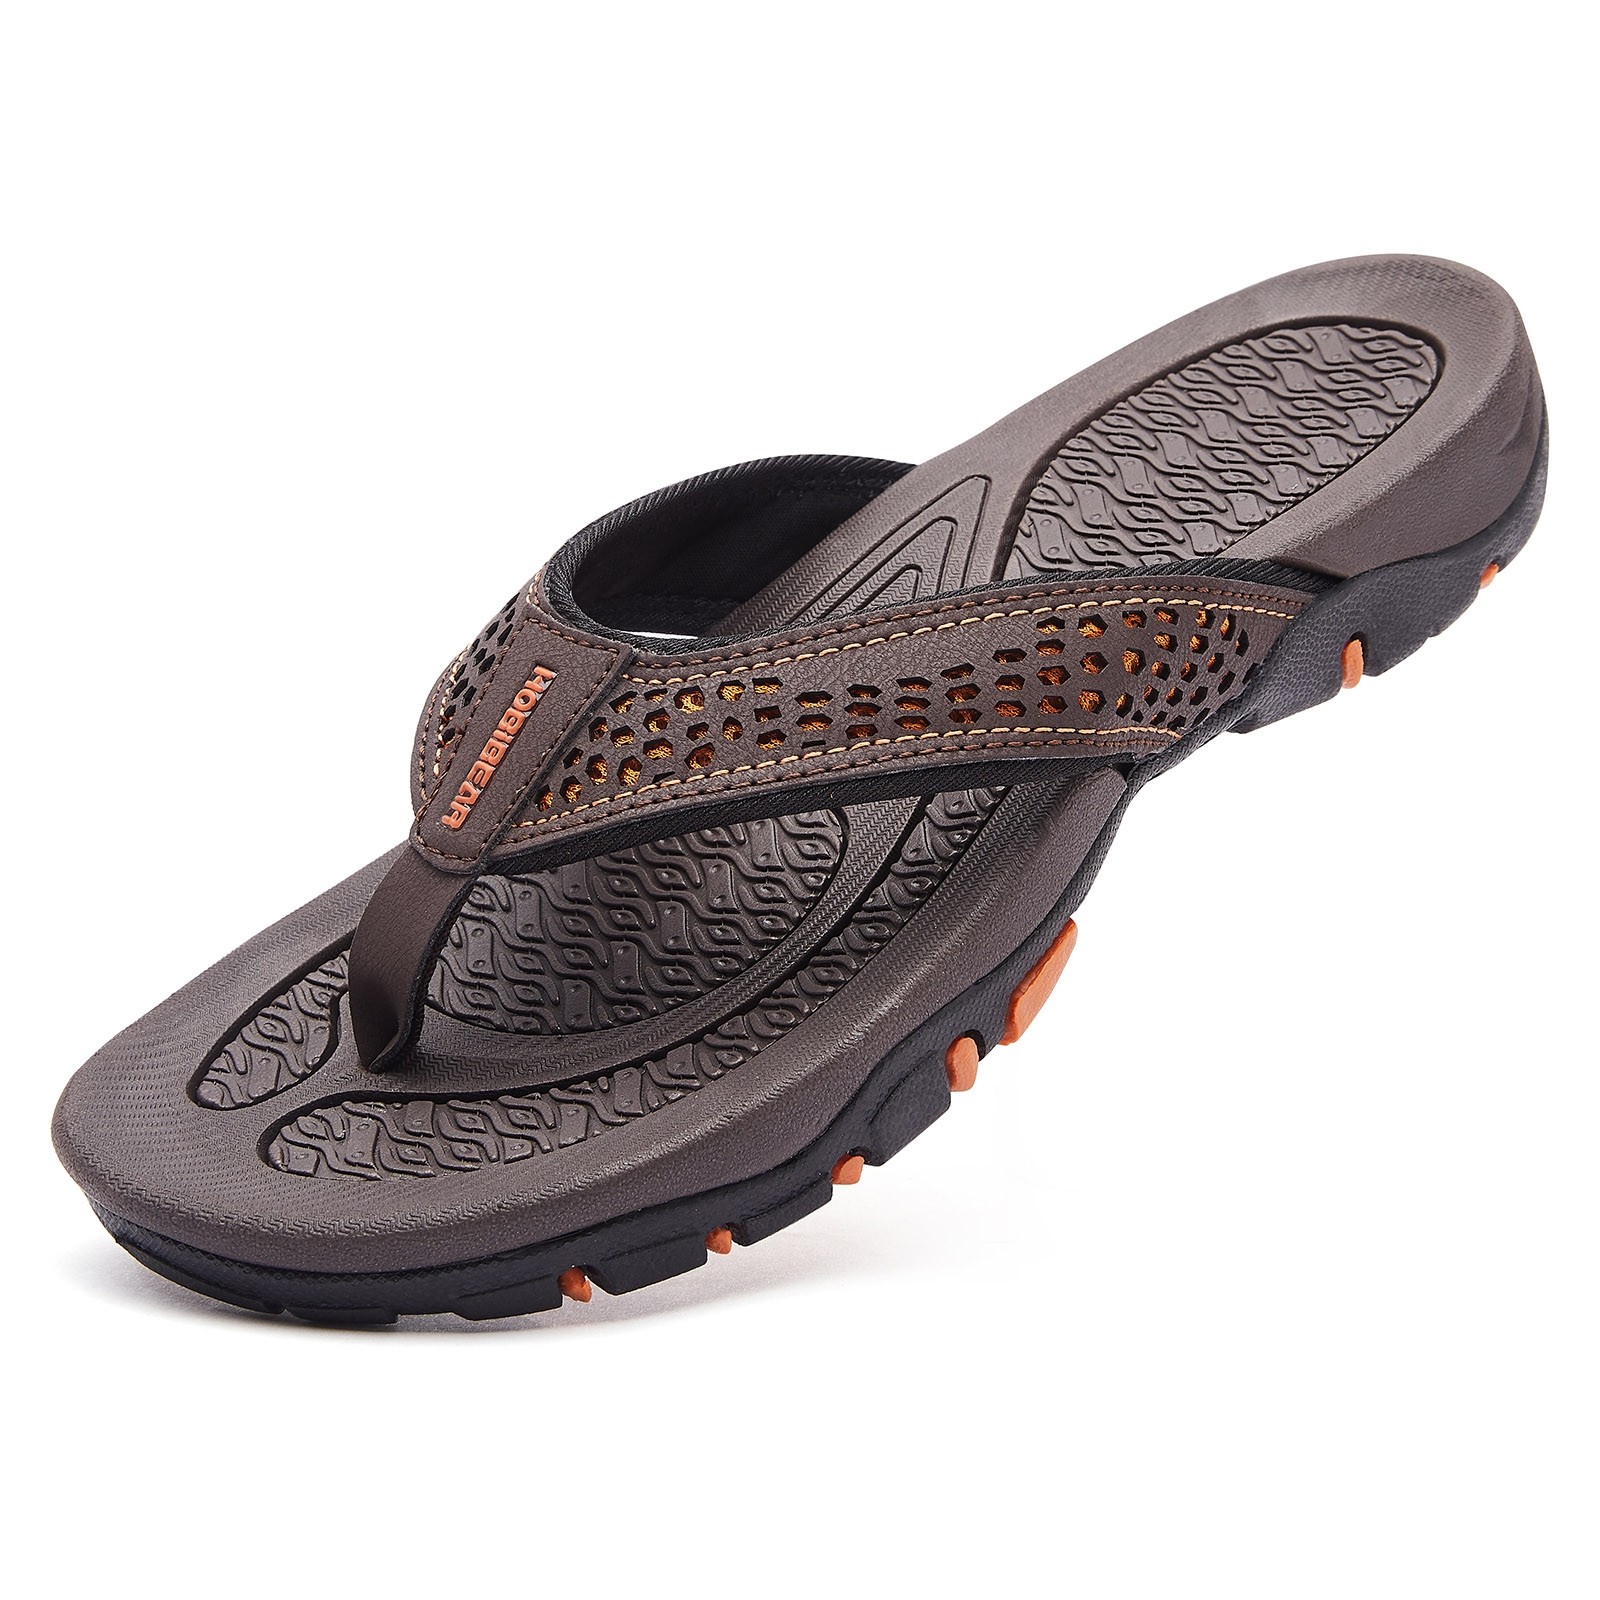 Mens Thong Sandals Indoor and Outdoor Beach Flip Flop Brown/Orange (Size 16)